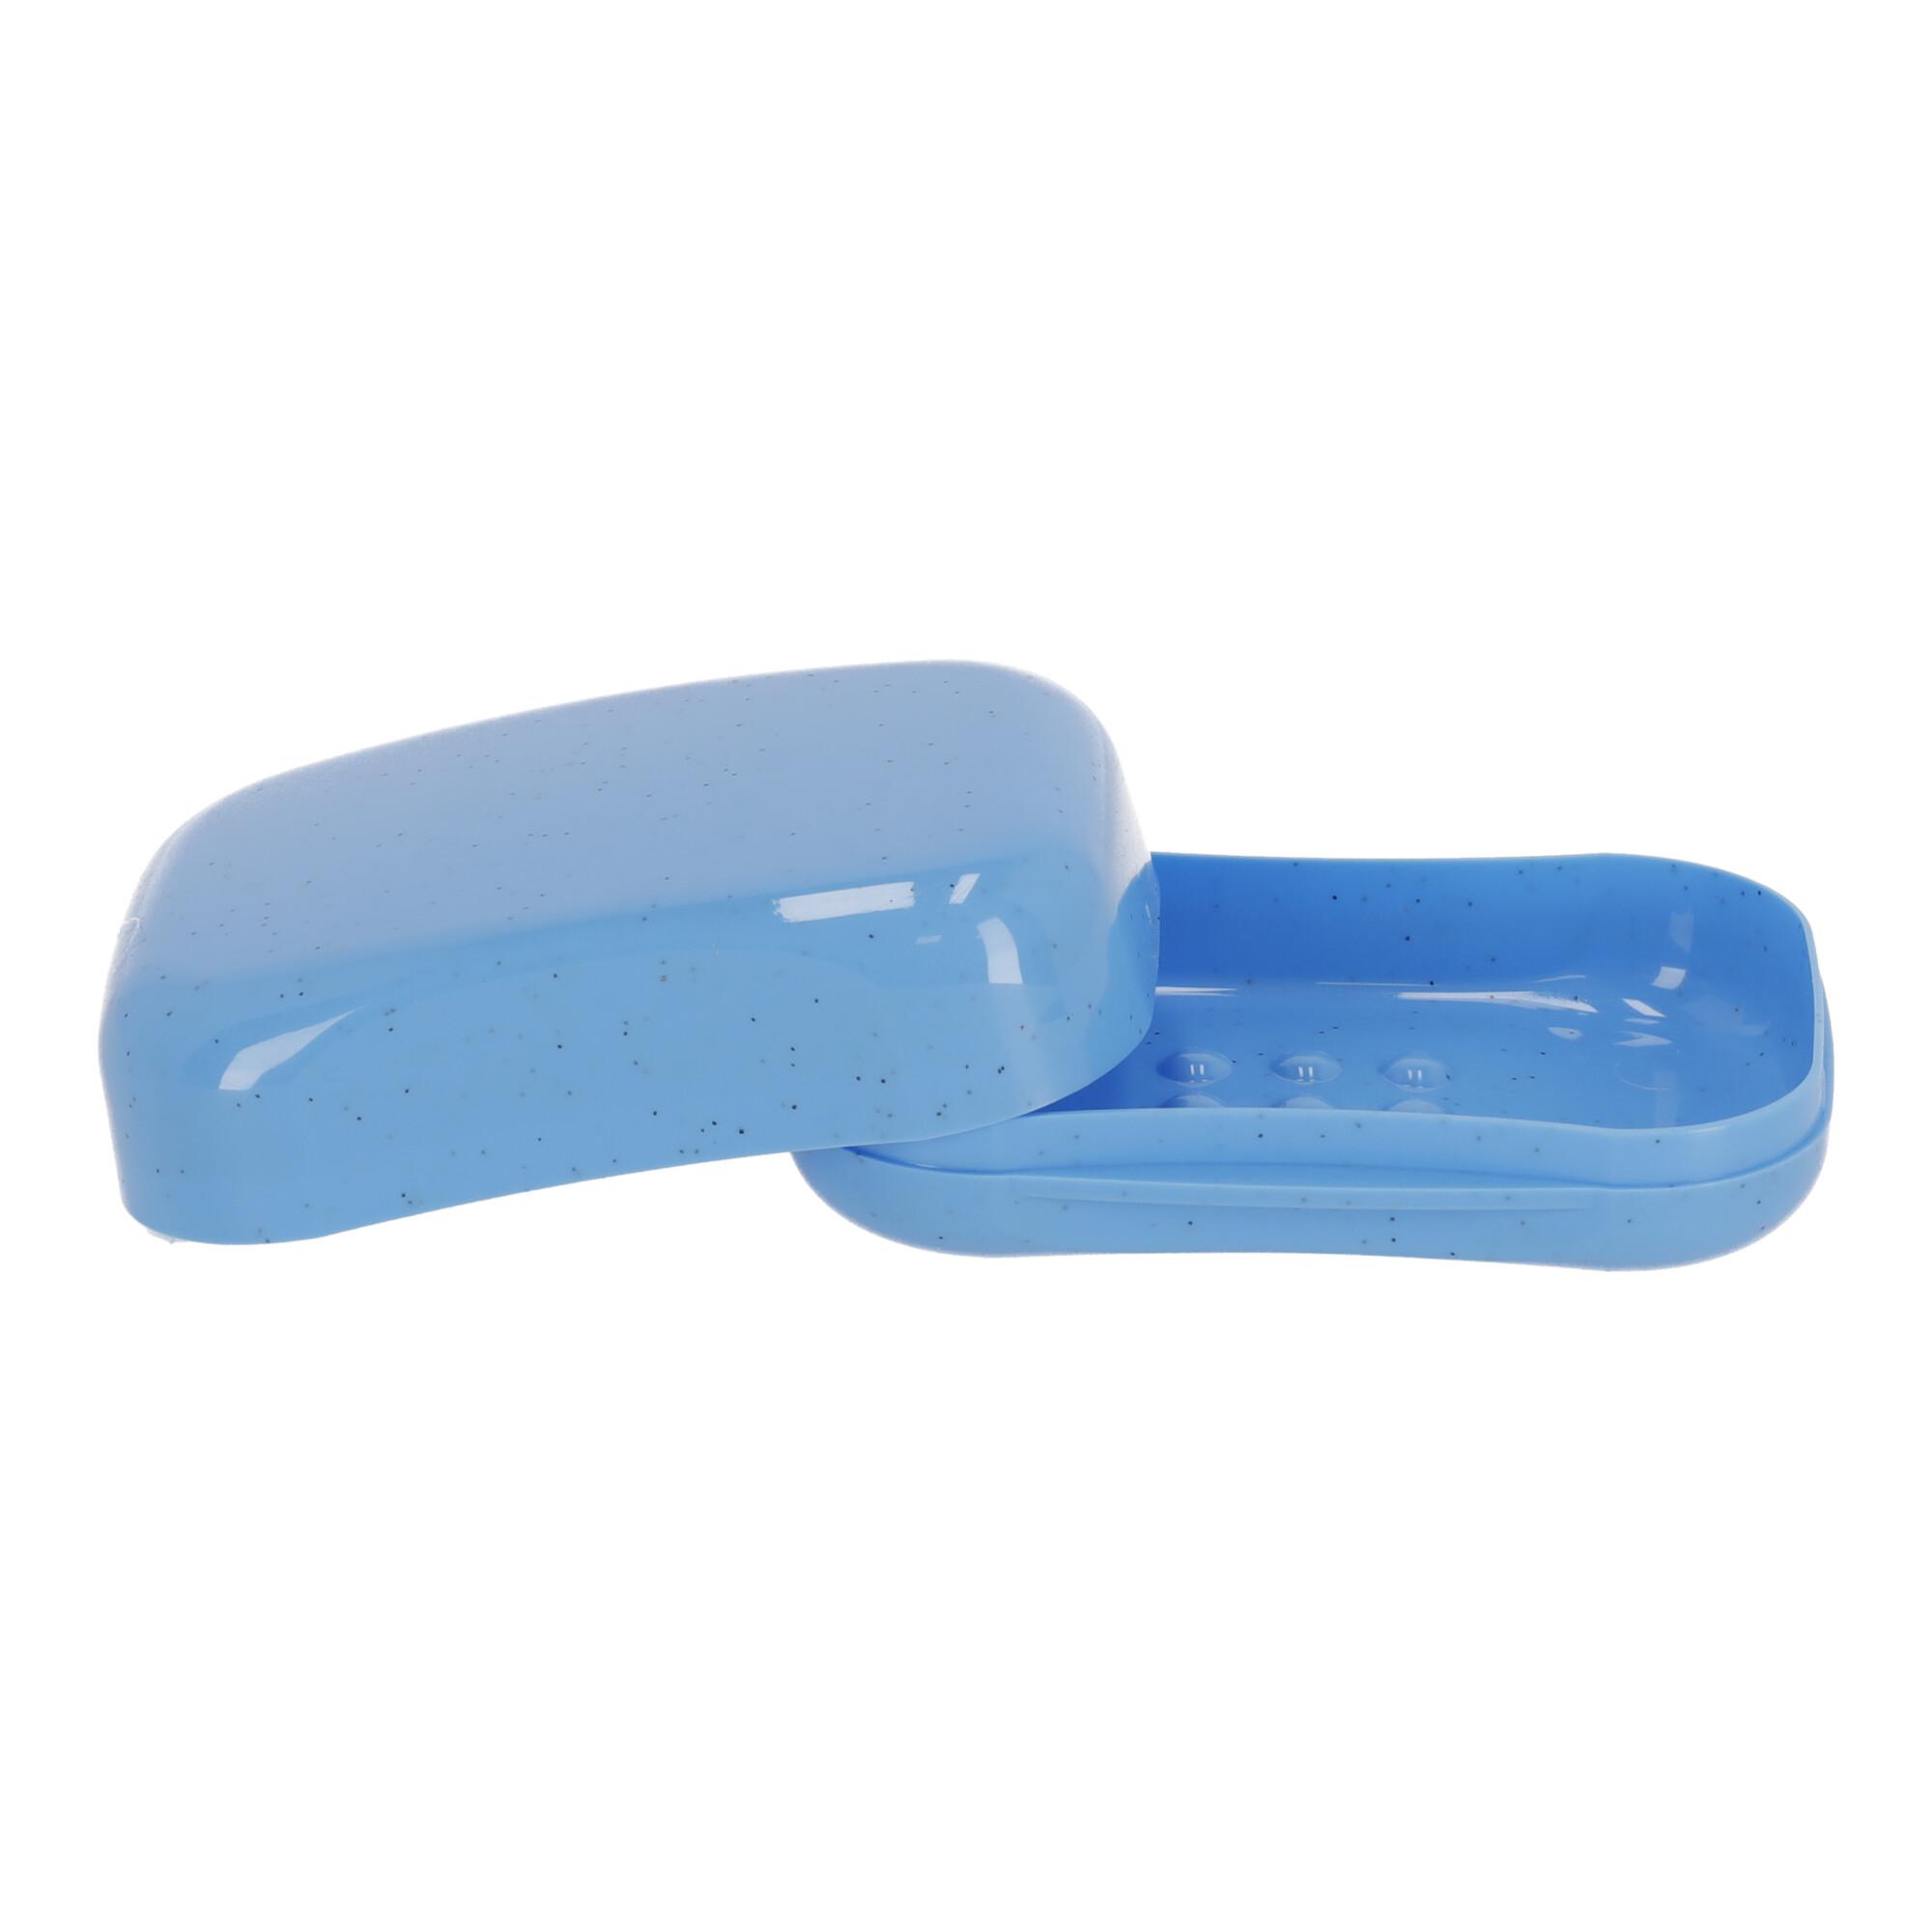 Tourist soap dish, closed plastic soap dish, type III - light blue